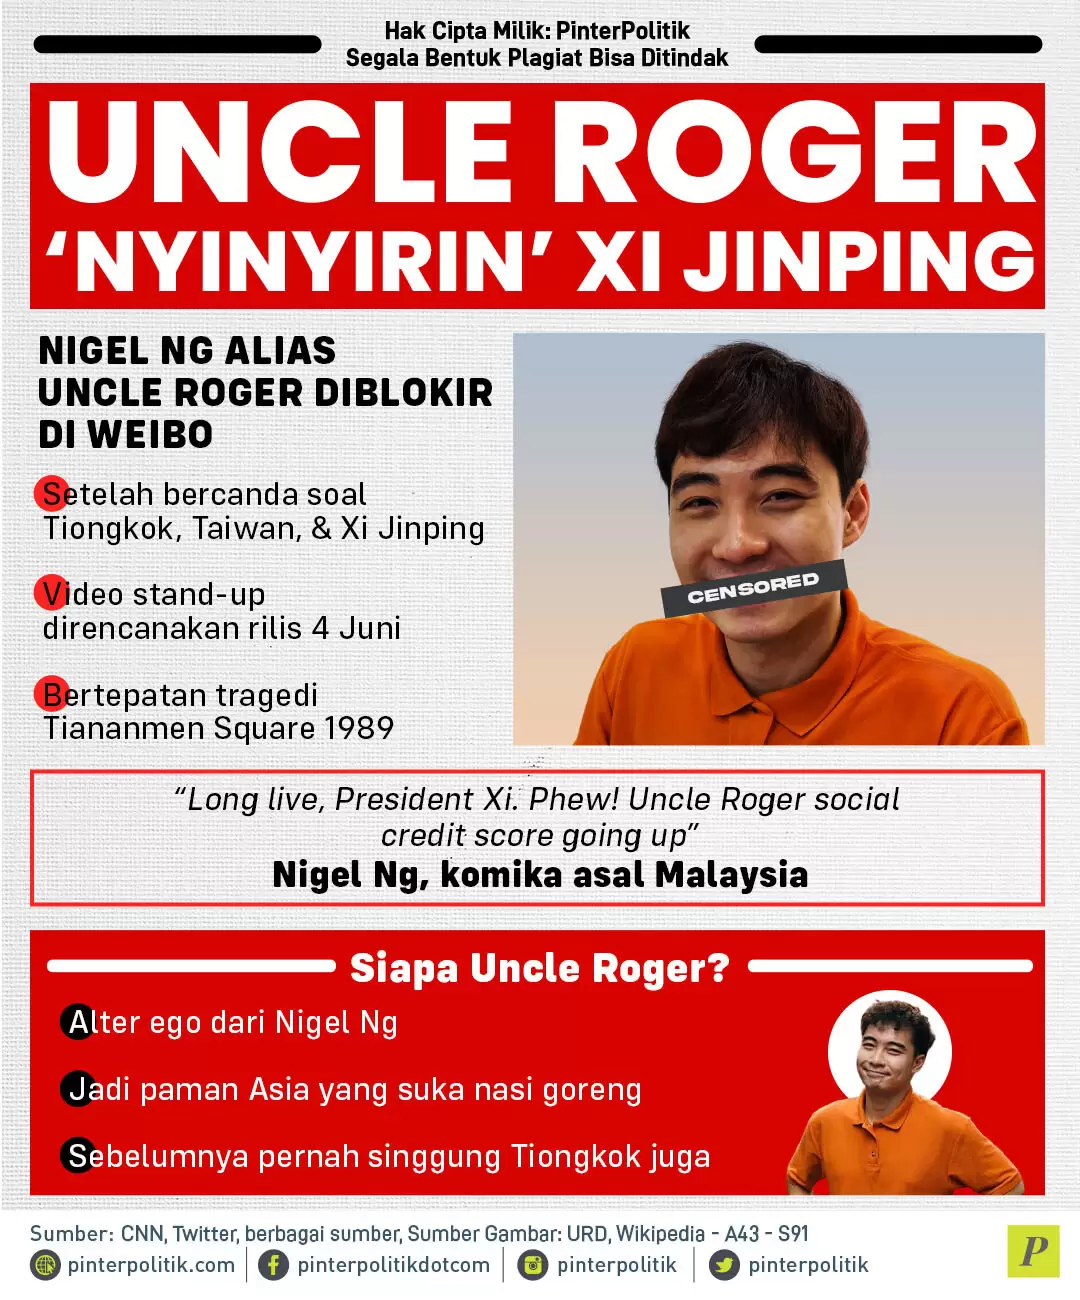 uncle roger ‘nyinyirin xi jinping